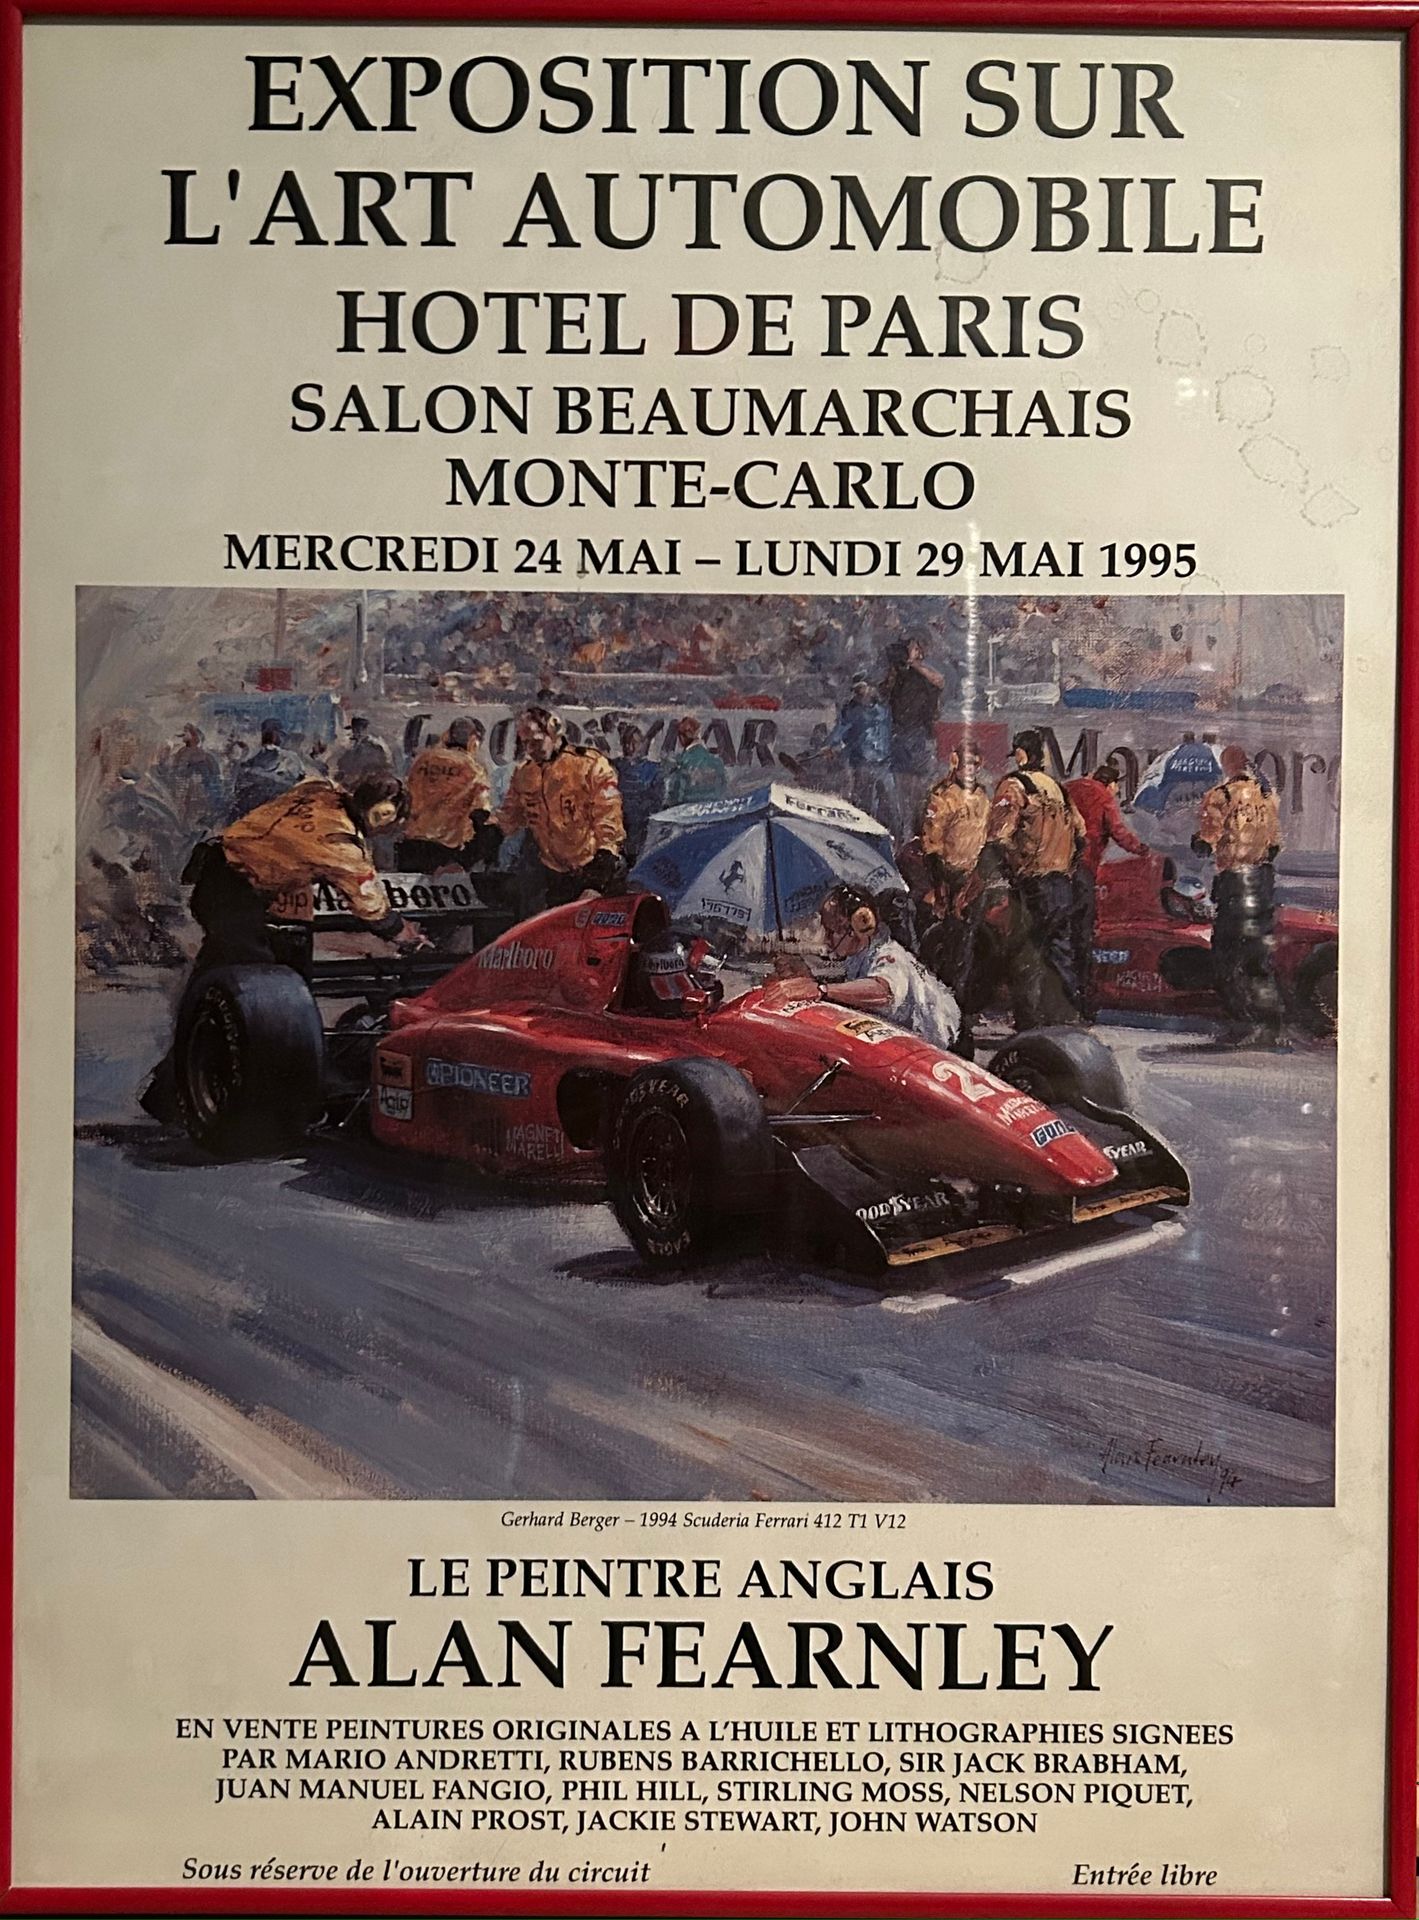 FEARNLEY FEARNLEY
Poster for the Automobile Art exhibition at the Hôtel de Paris&hellip;